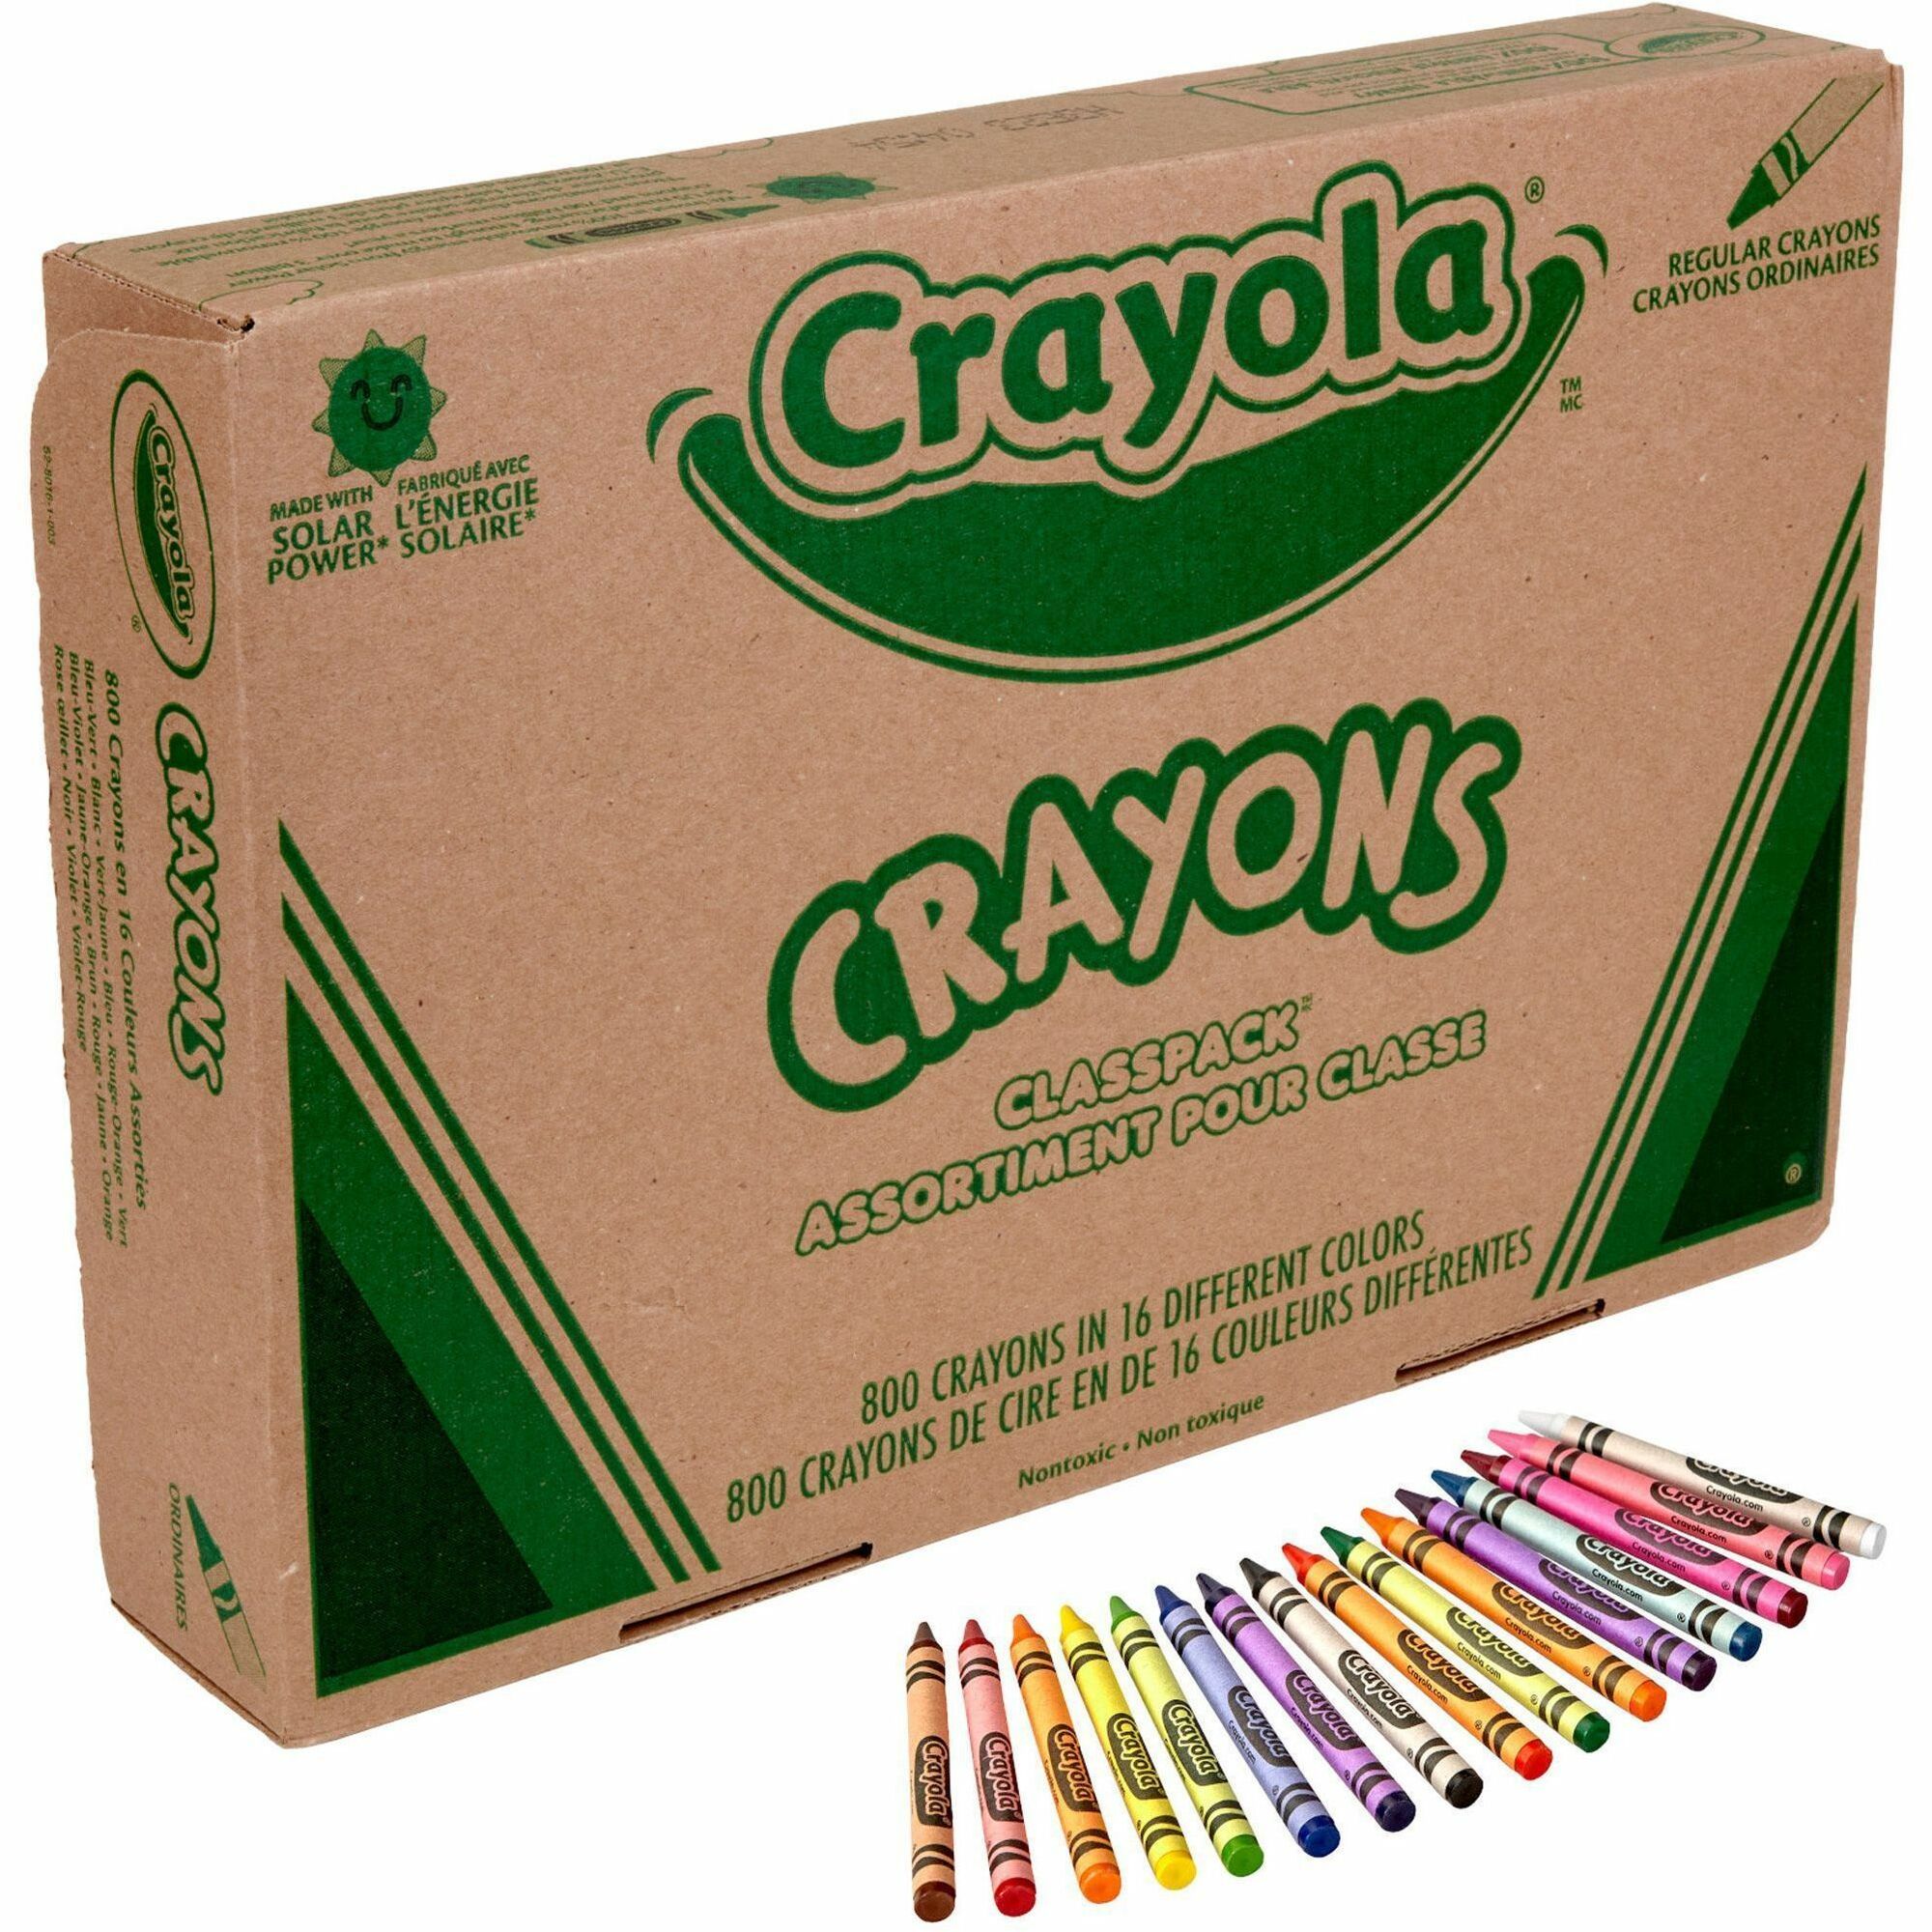 Black, Brown, Orange and White Crayons Stock Image - Image of